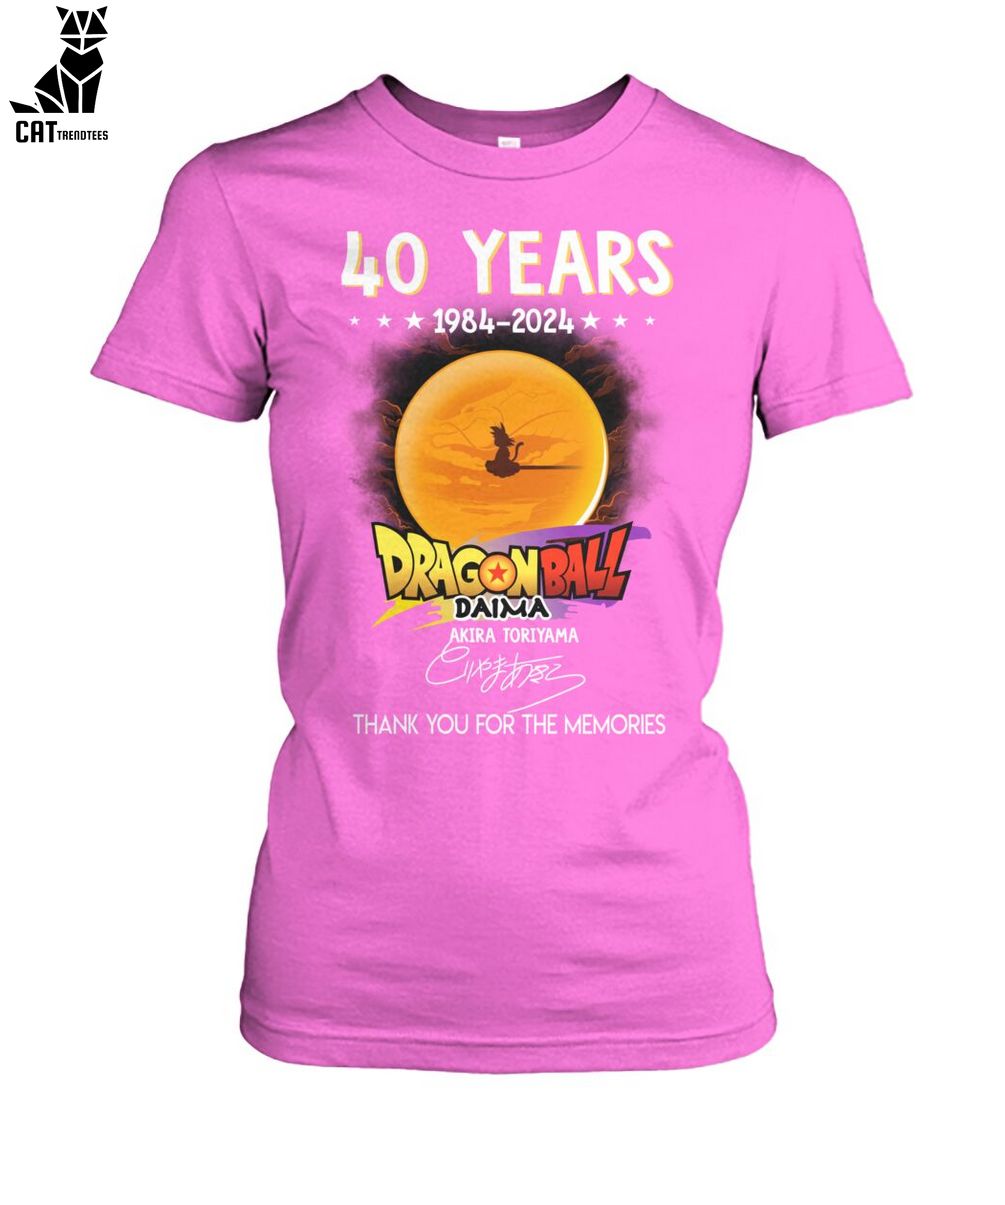 40 Years 1984-2024 Dragonball Daima Akira Toriyama Thank You For The Memories Unisex T-Shirt